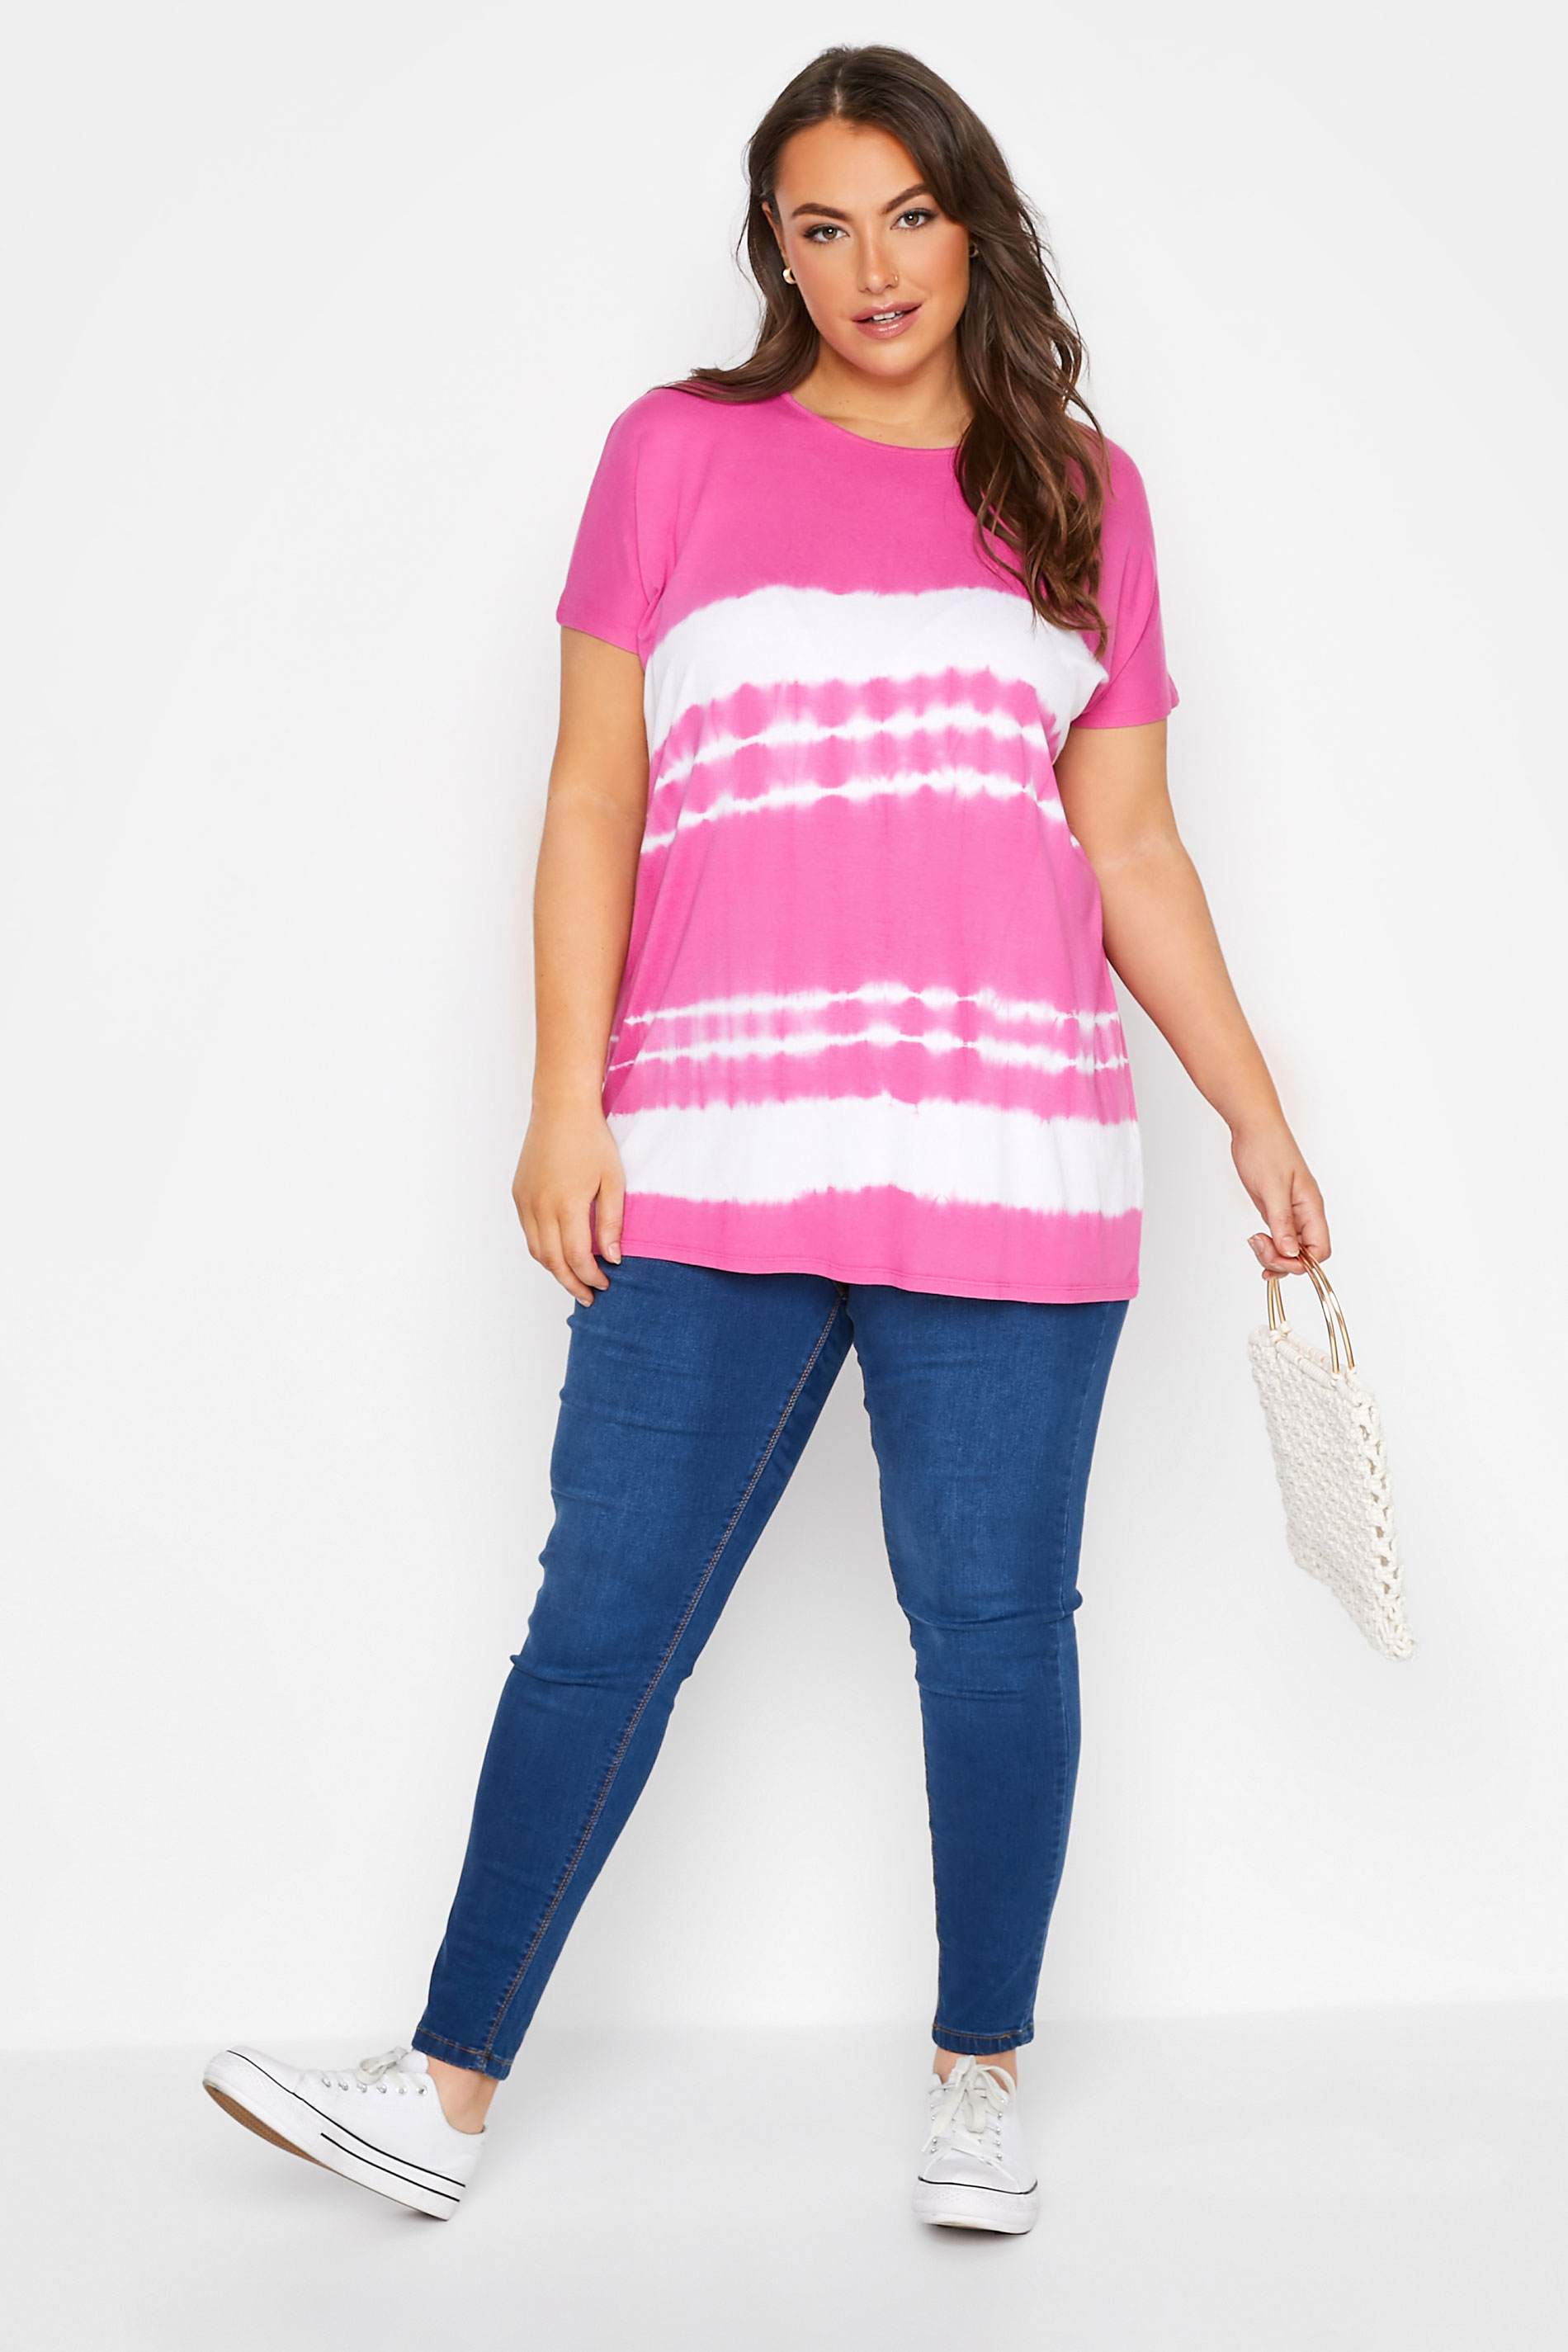 Grande taille  Tops Grande taille  T-Shirts | T-Shirt Rose Tie & Dye en Jersey - IY47034